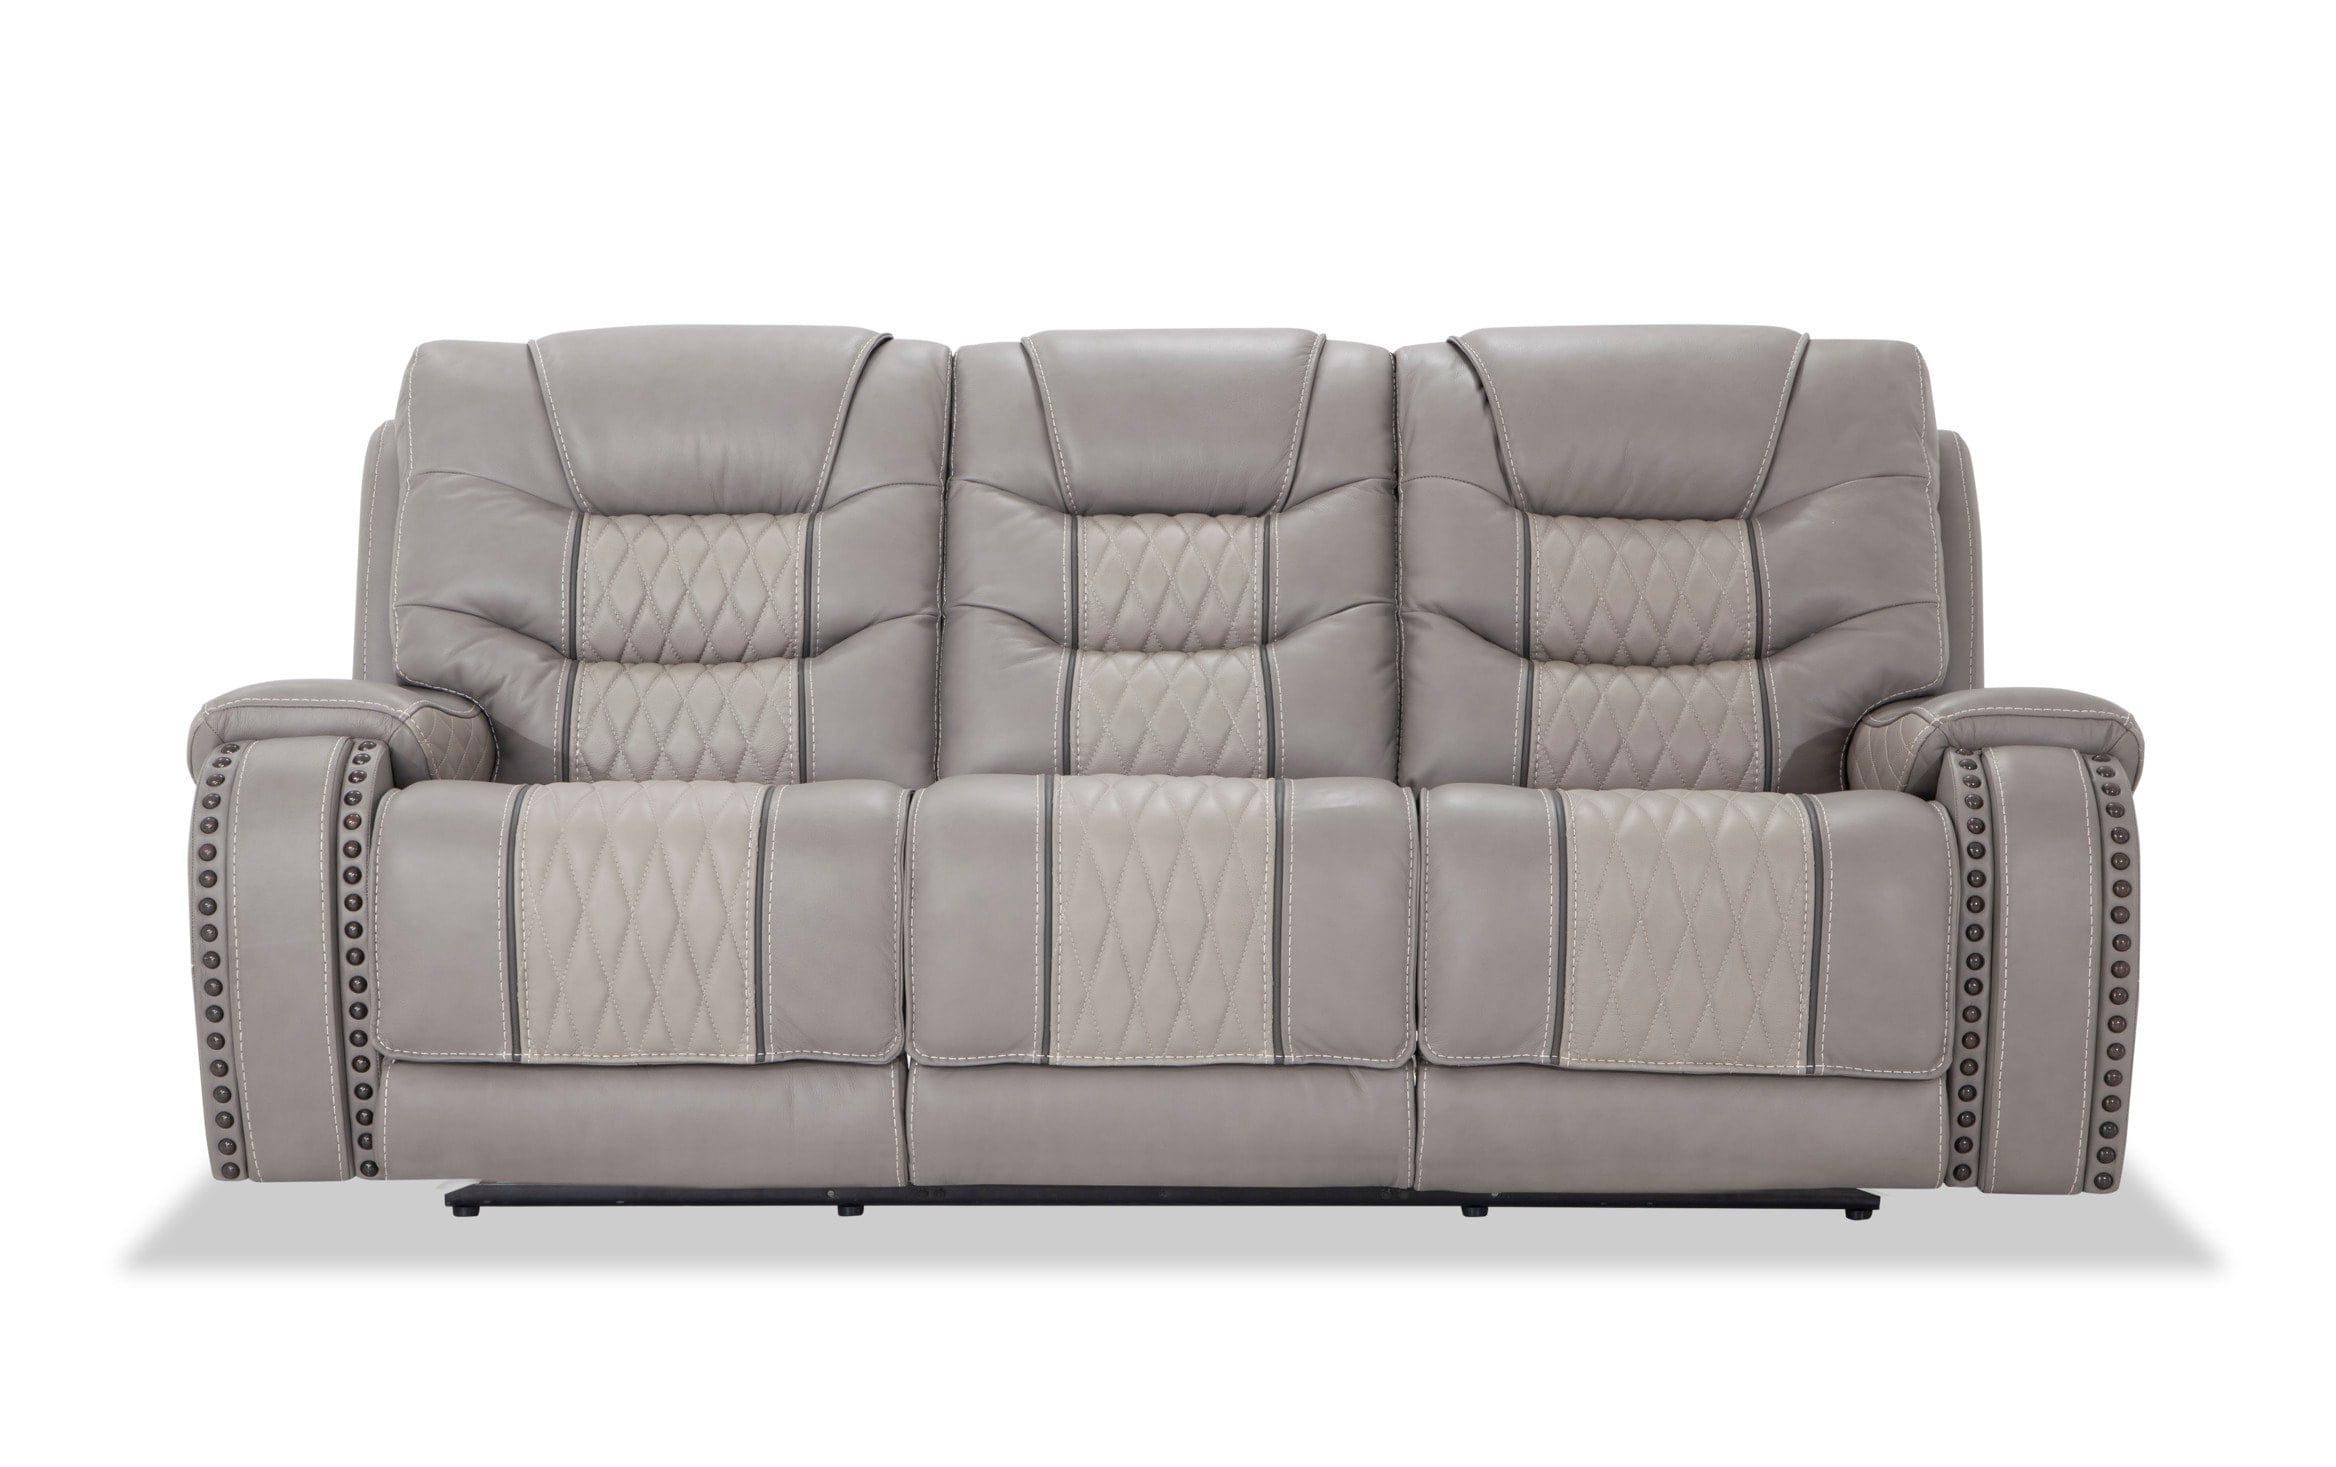 Bobs Furniture Leather Sofa : Trailblazer Gray Leather For Most Recent Trailblazer Gray Leather Power Reclining Sofas (View 3 of 20)